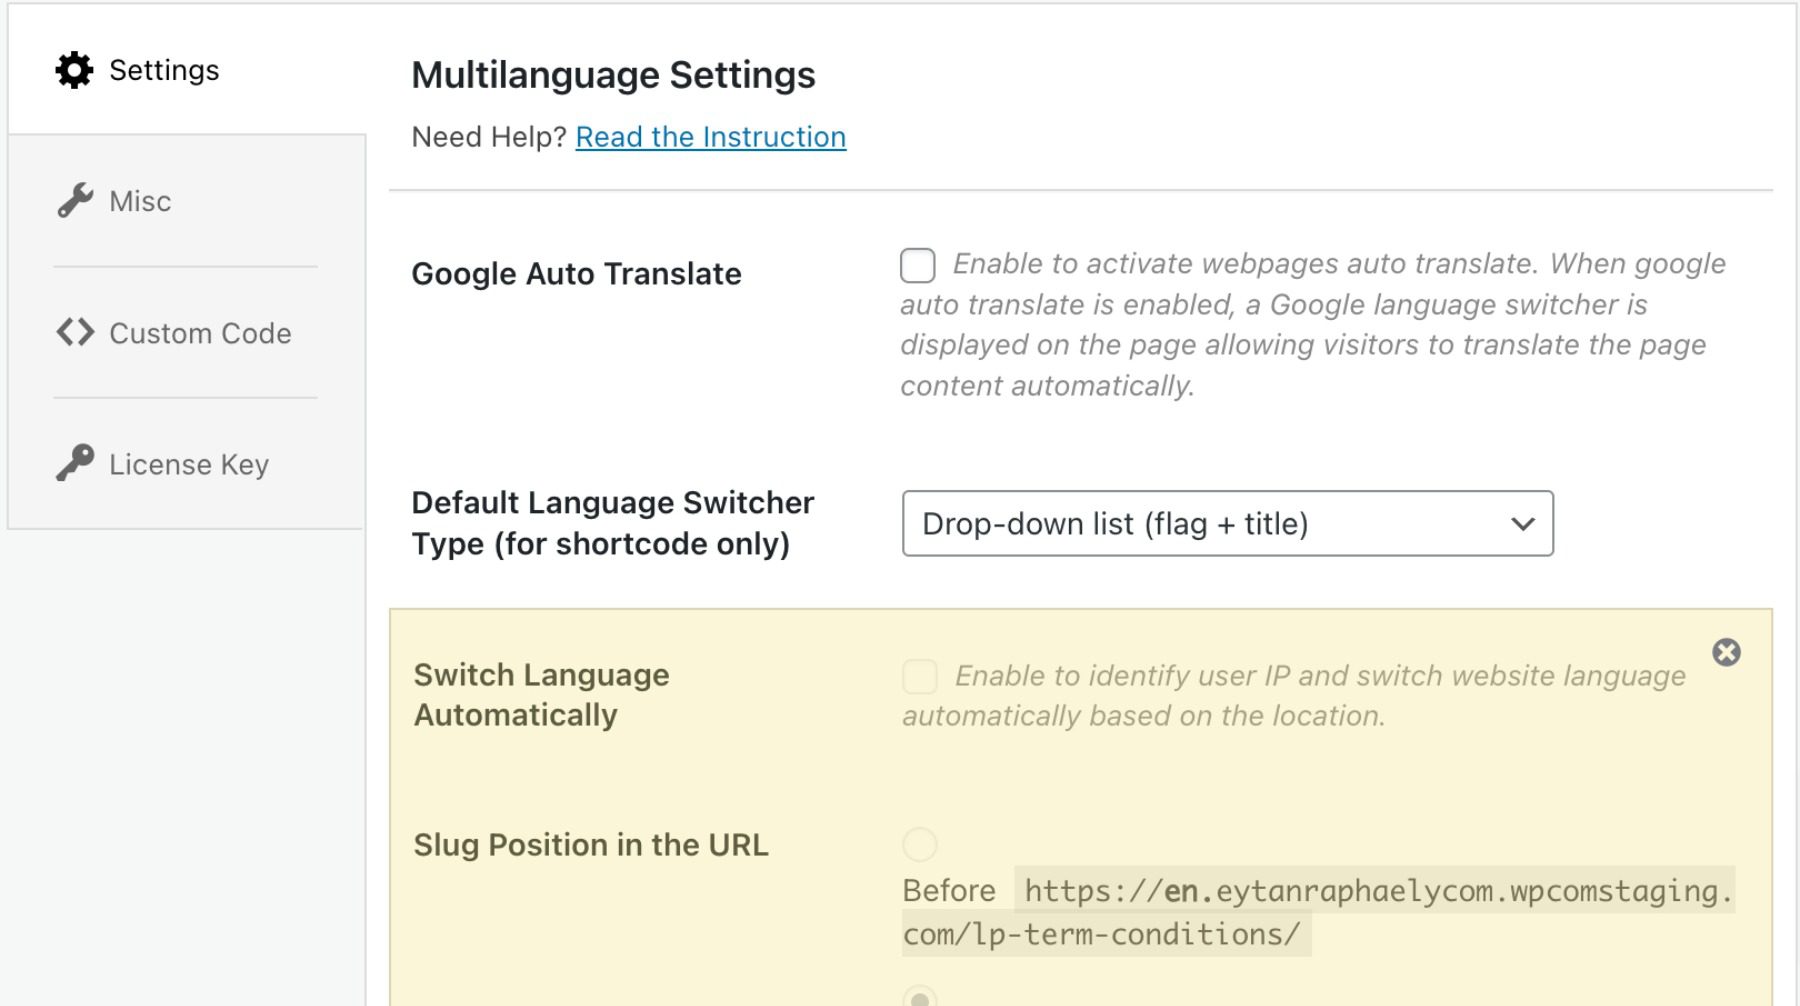 Multilanguage settings